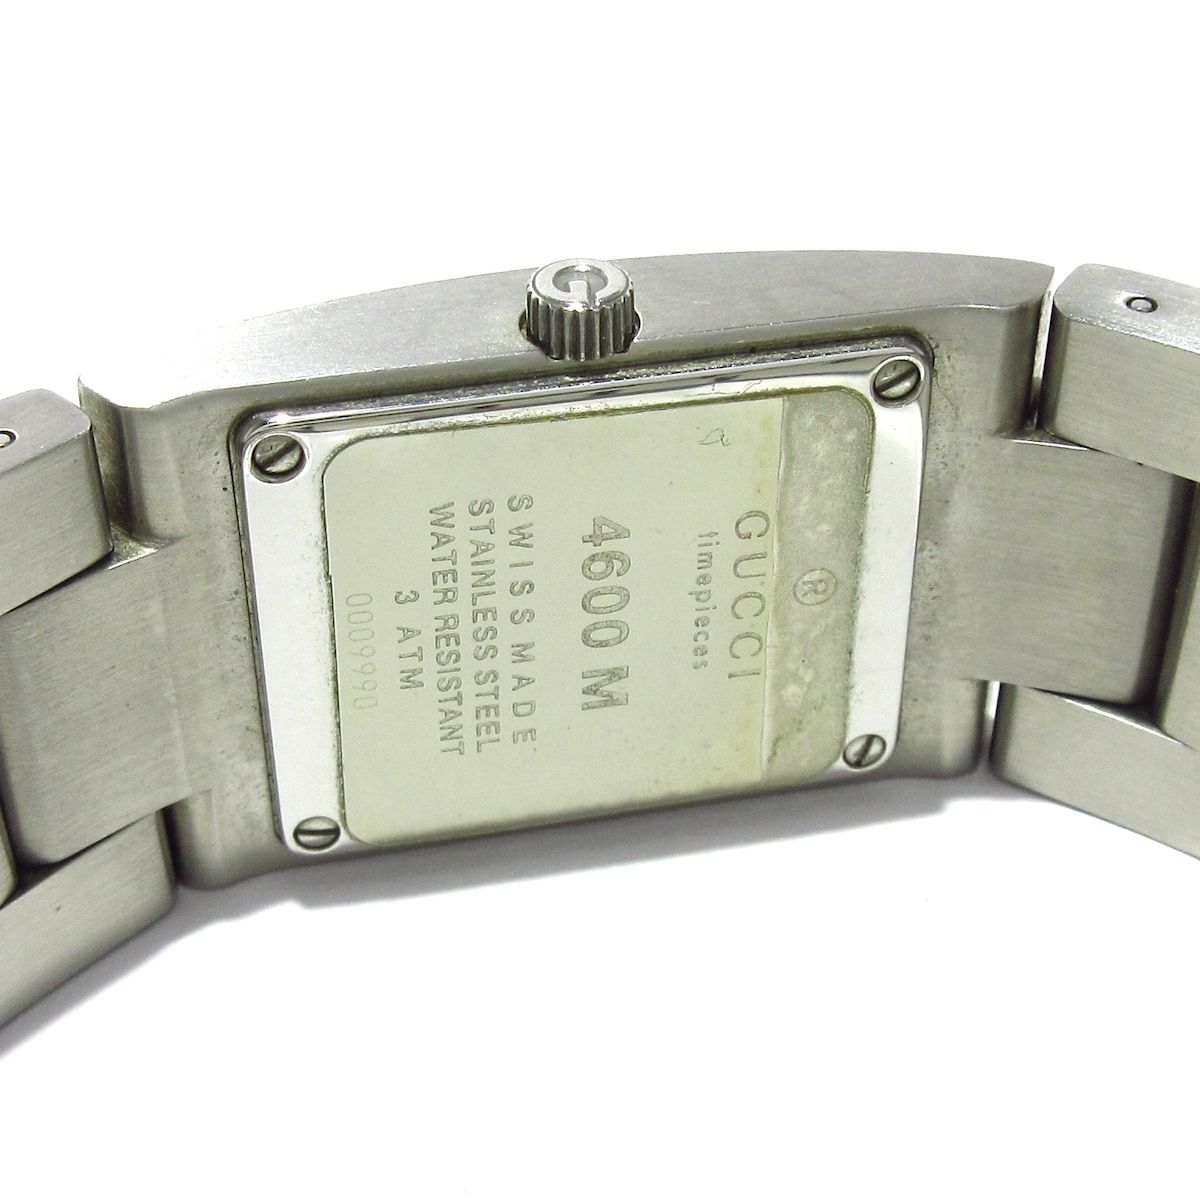 GUCCI(グッチ) 腕時計 - 4600M メンズ 黒 - メルカリ